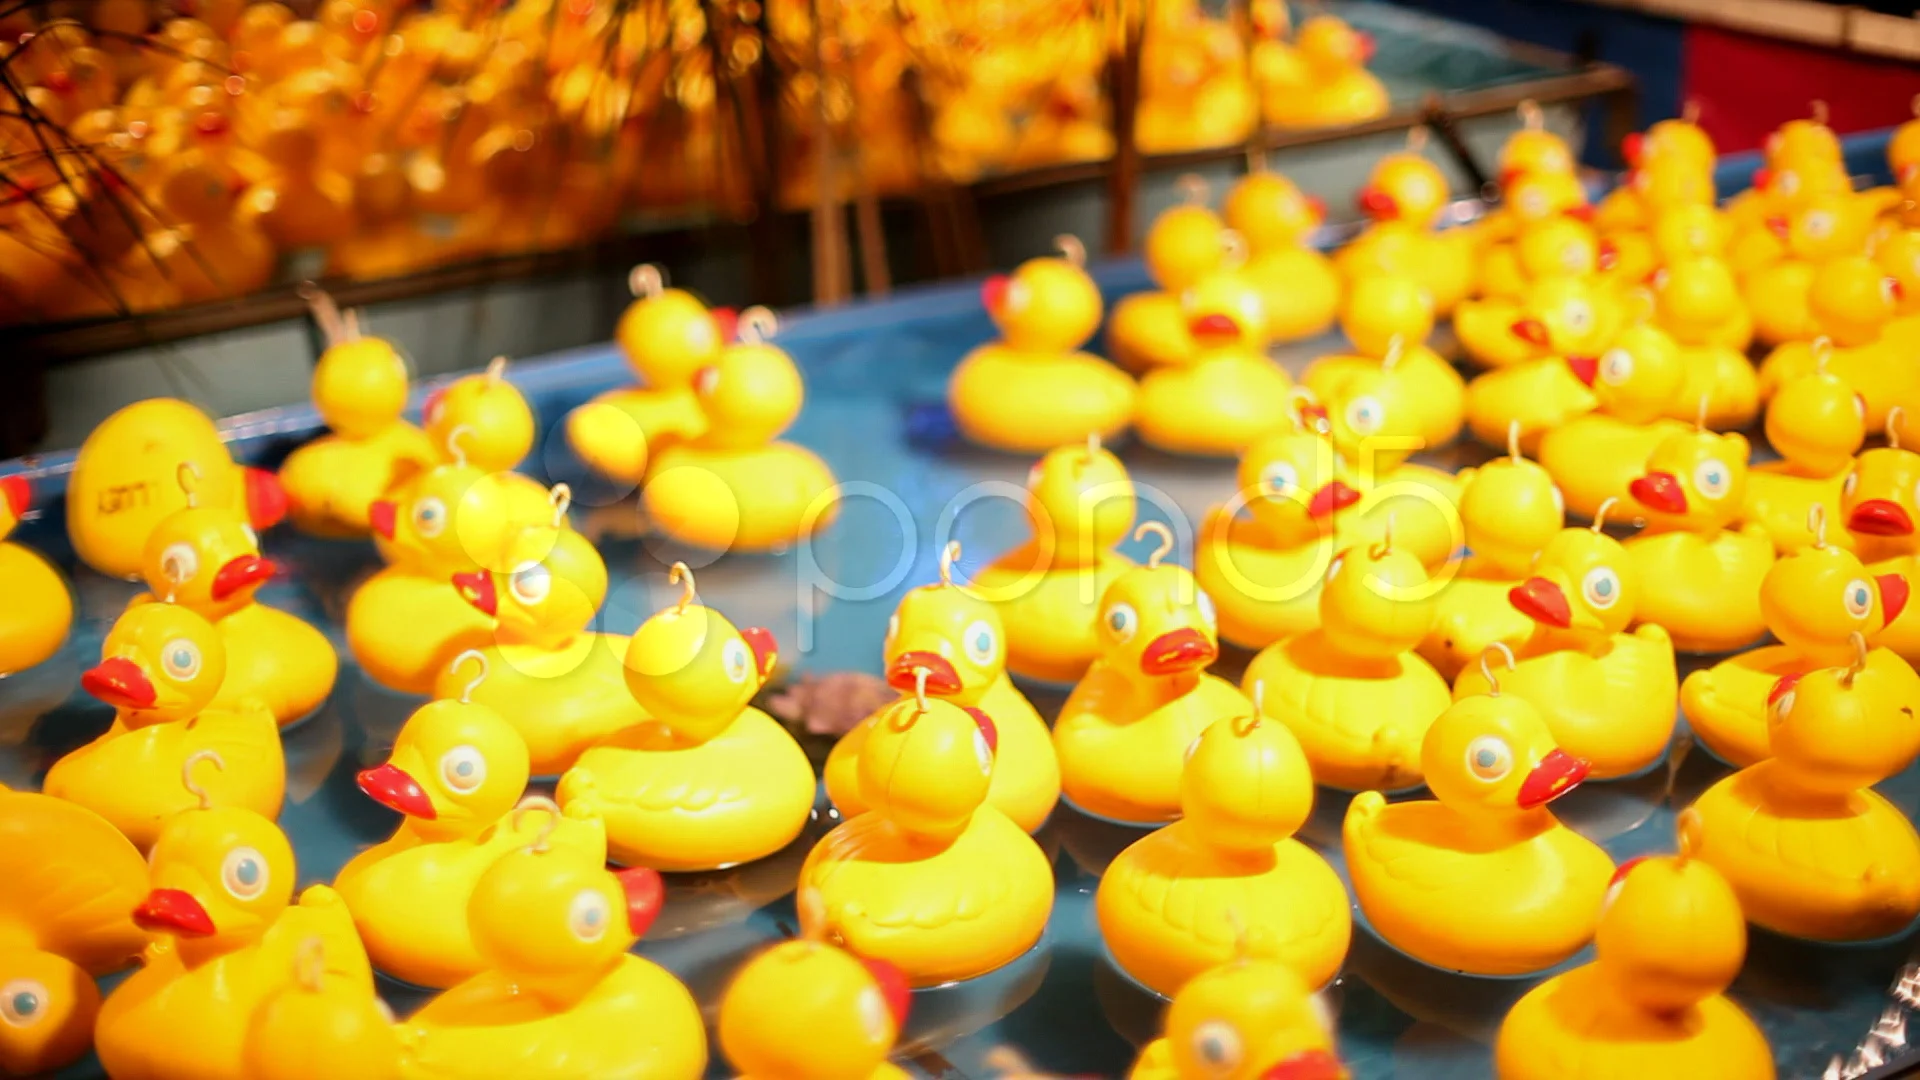 https://images.pond5.com/yellow-rubber-ducks-carnival-game-000369048_prevstill.jpeg